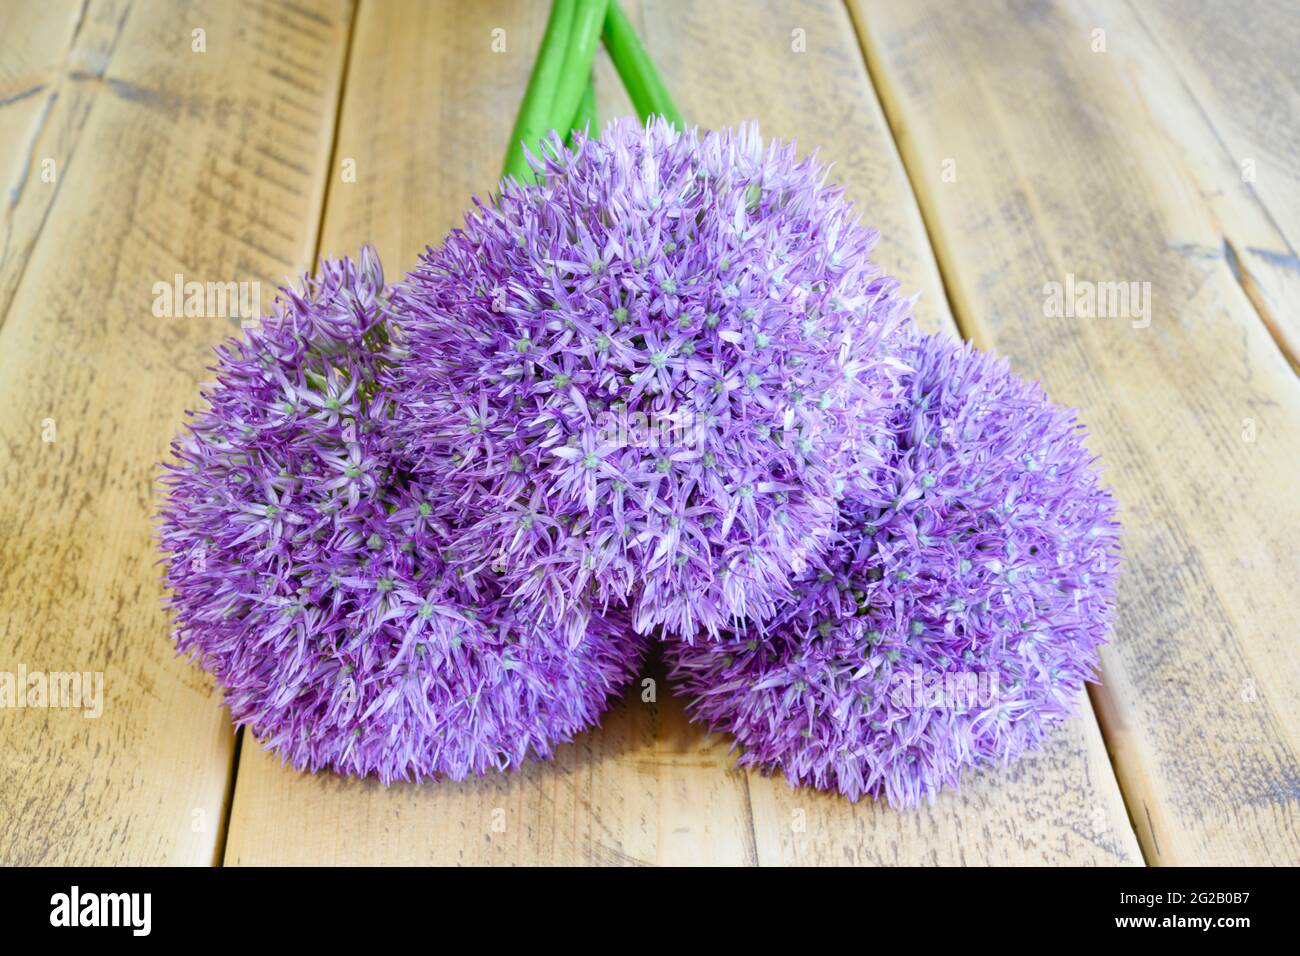 Three Purple Allium flowers (Allium aflatunense), also known as Dutch Garlic, lying on a wooden table top Stock Photo